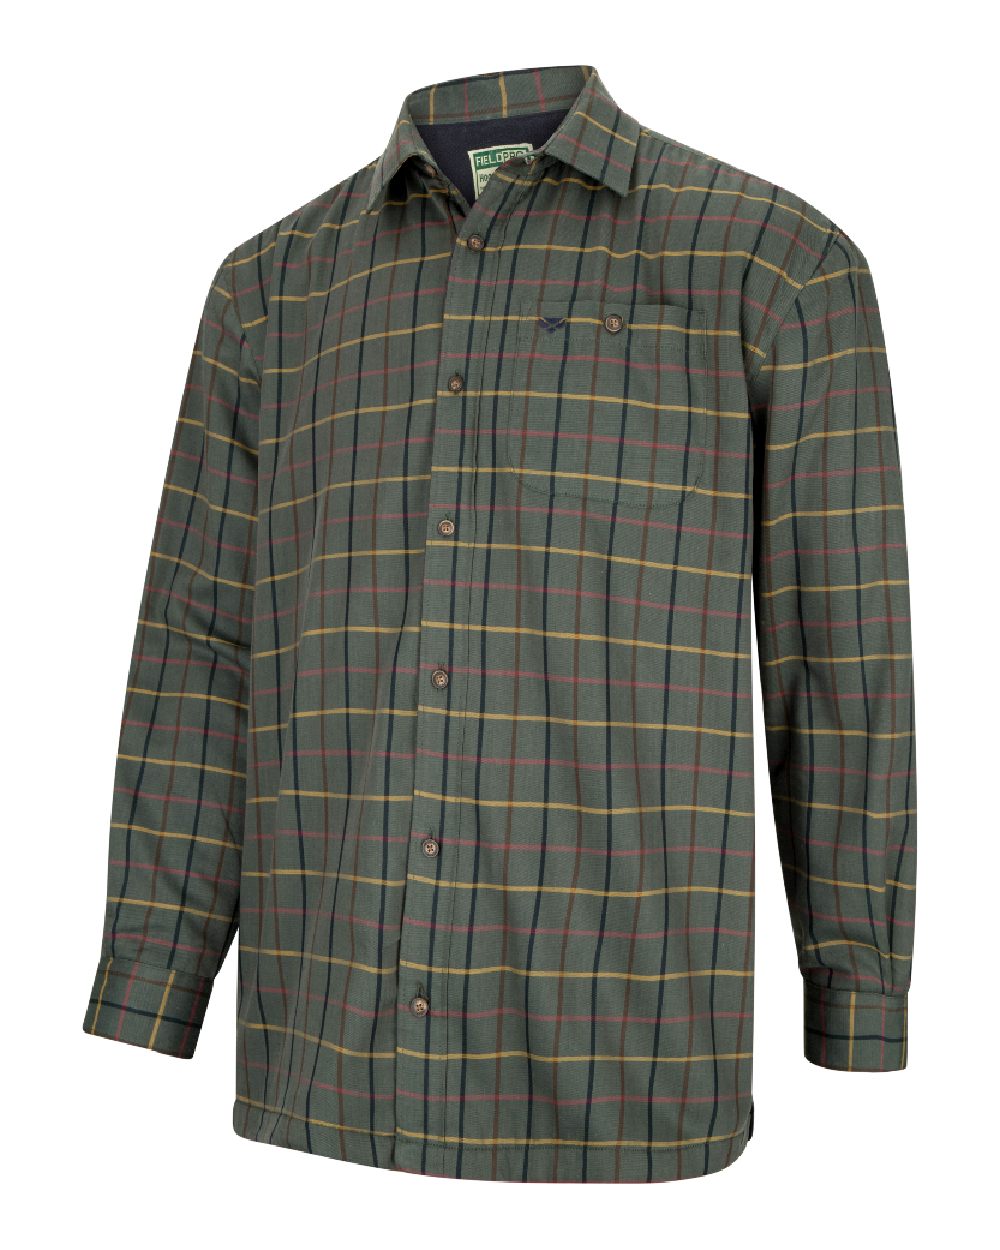 Hoggs of Fife Micro Fleece Lined Shirt in Beech 